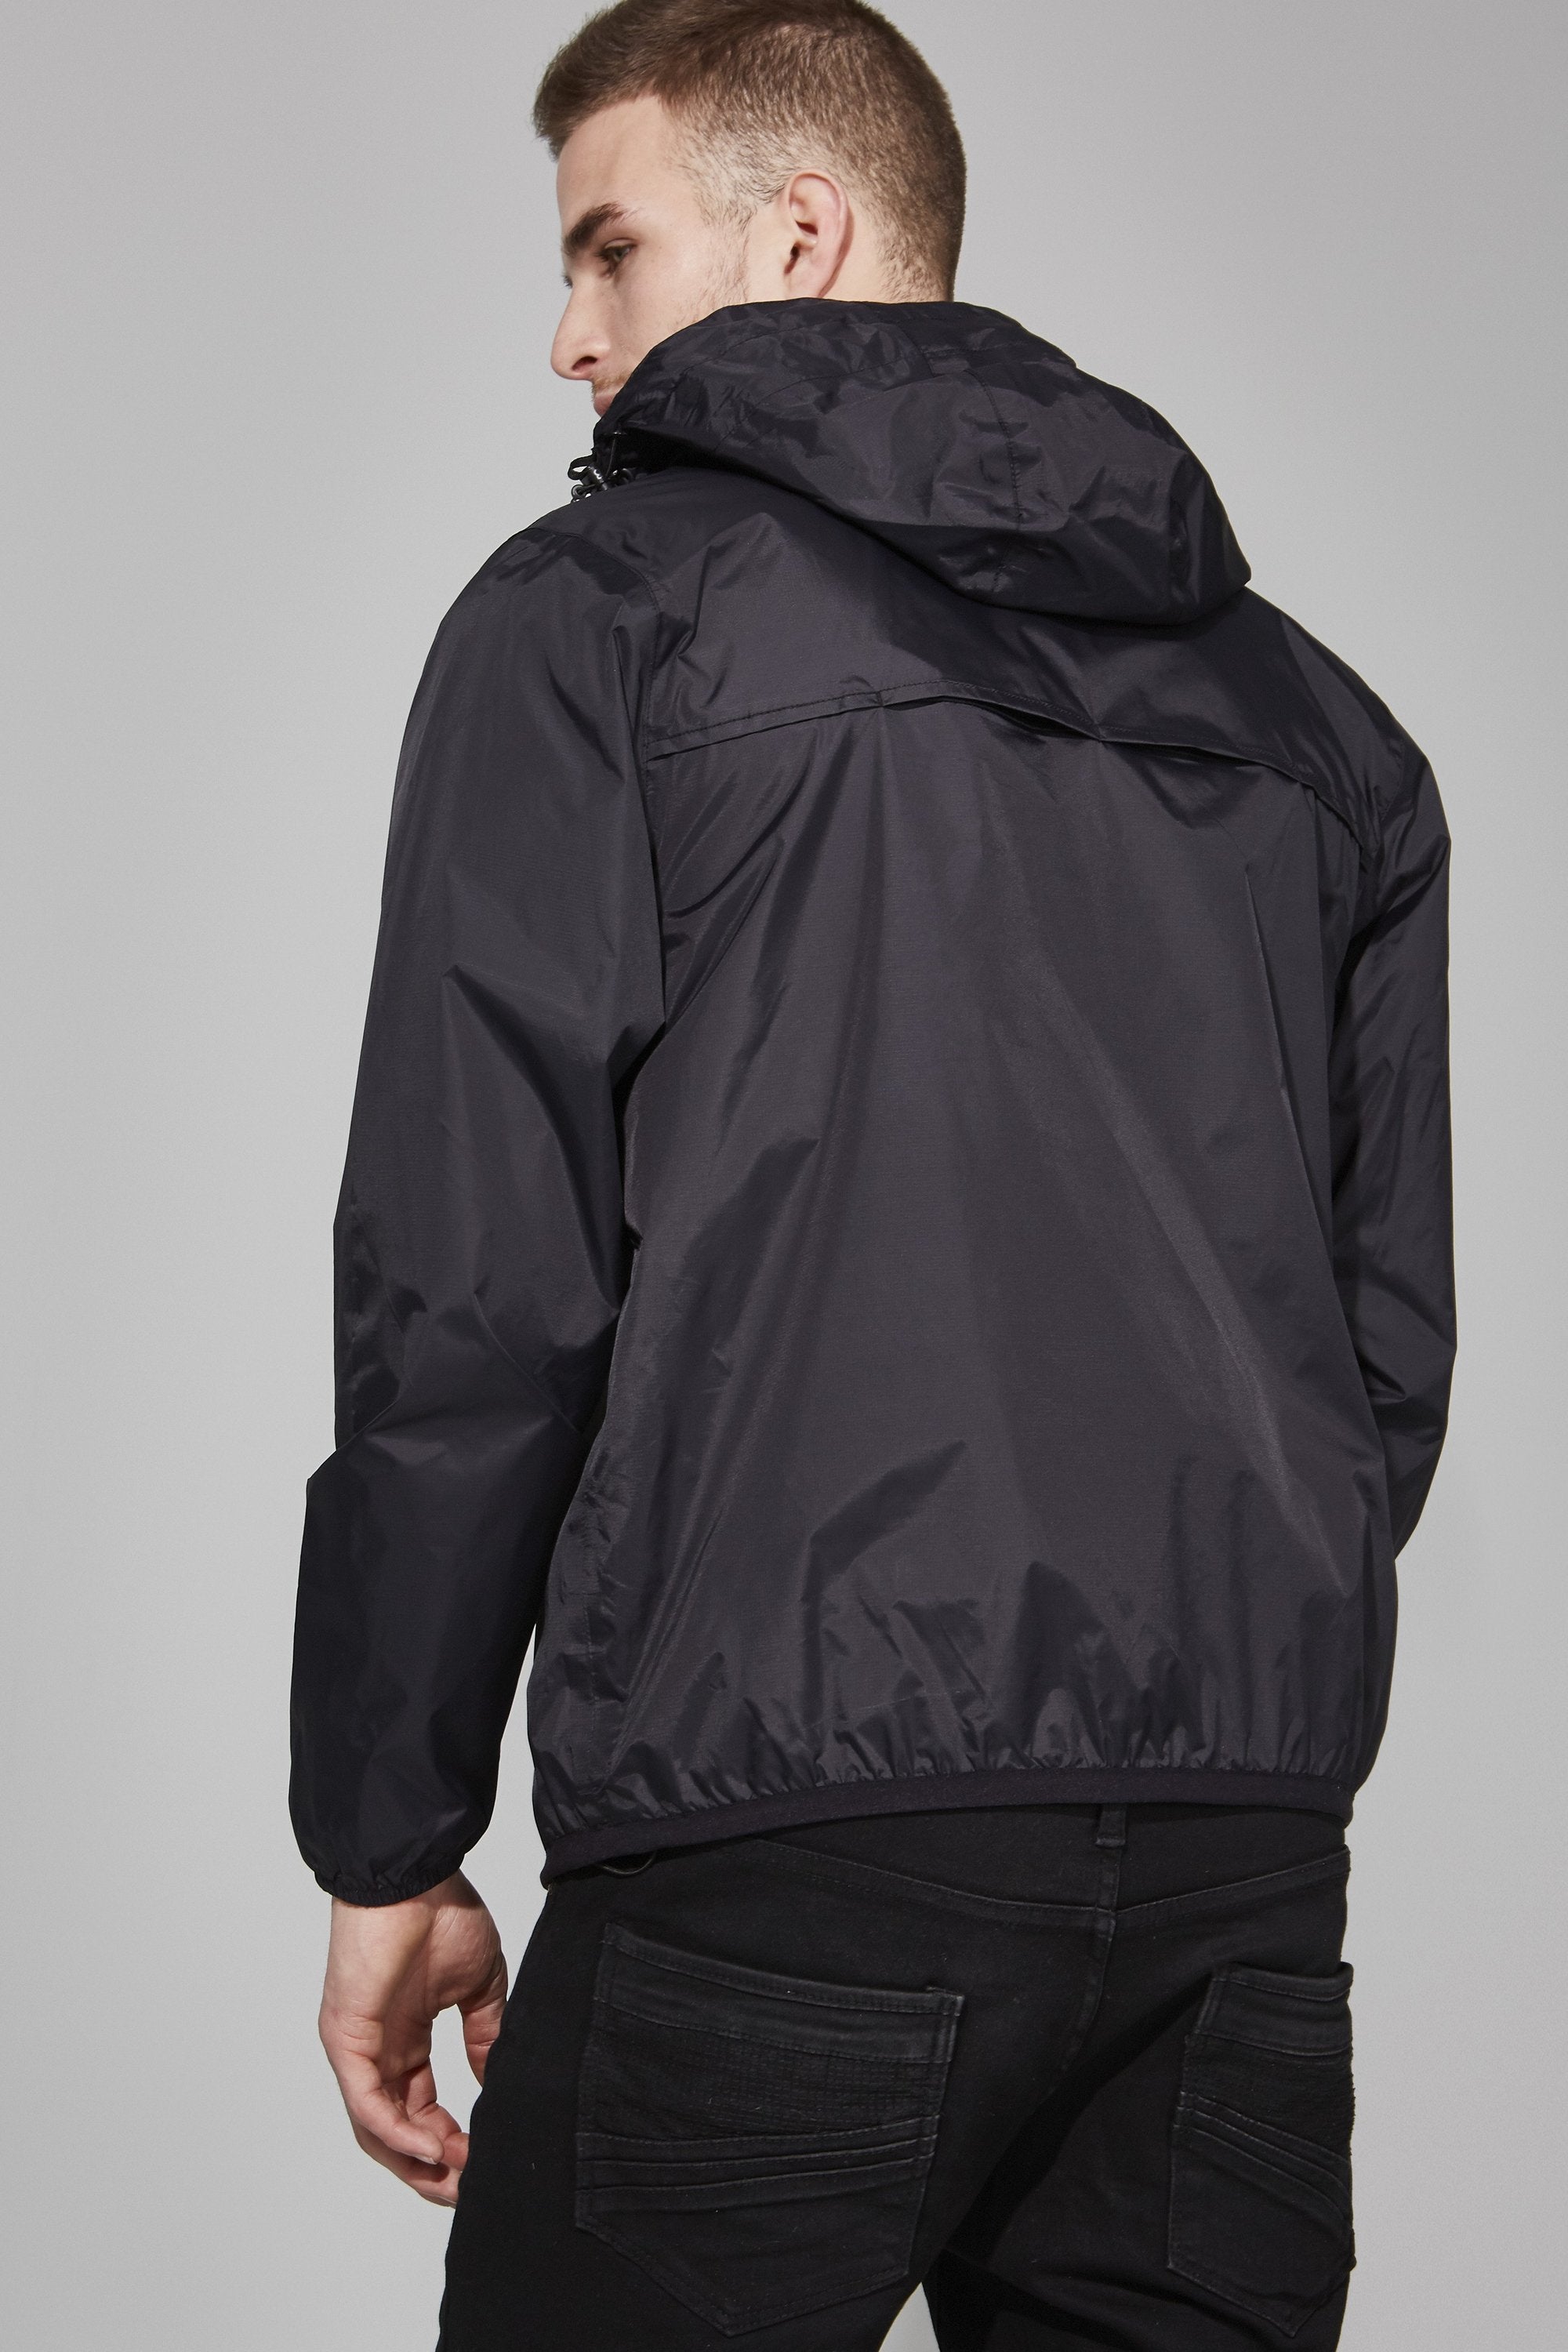 Picture of a Men's Quarter Zip Black Waterproof Rain Jacket back view